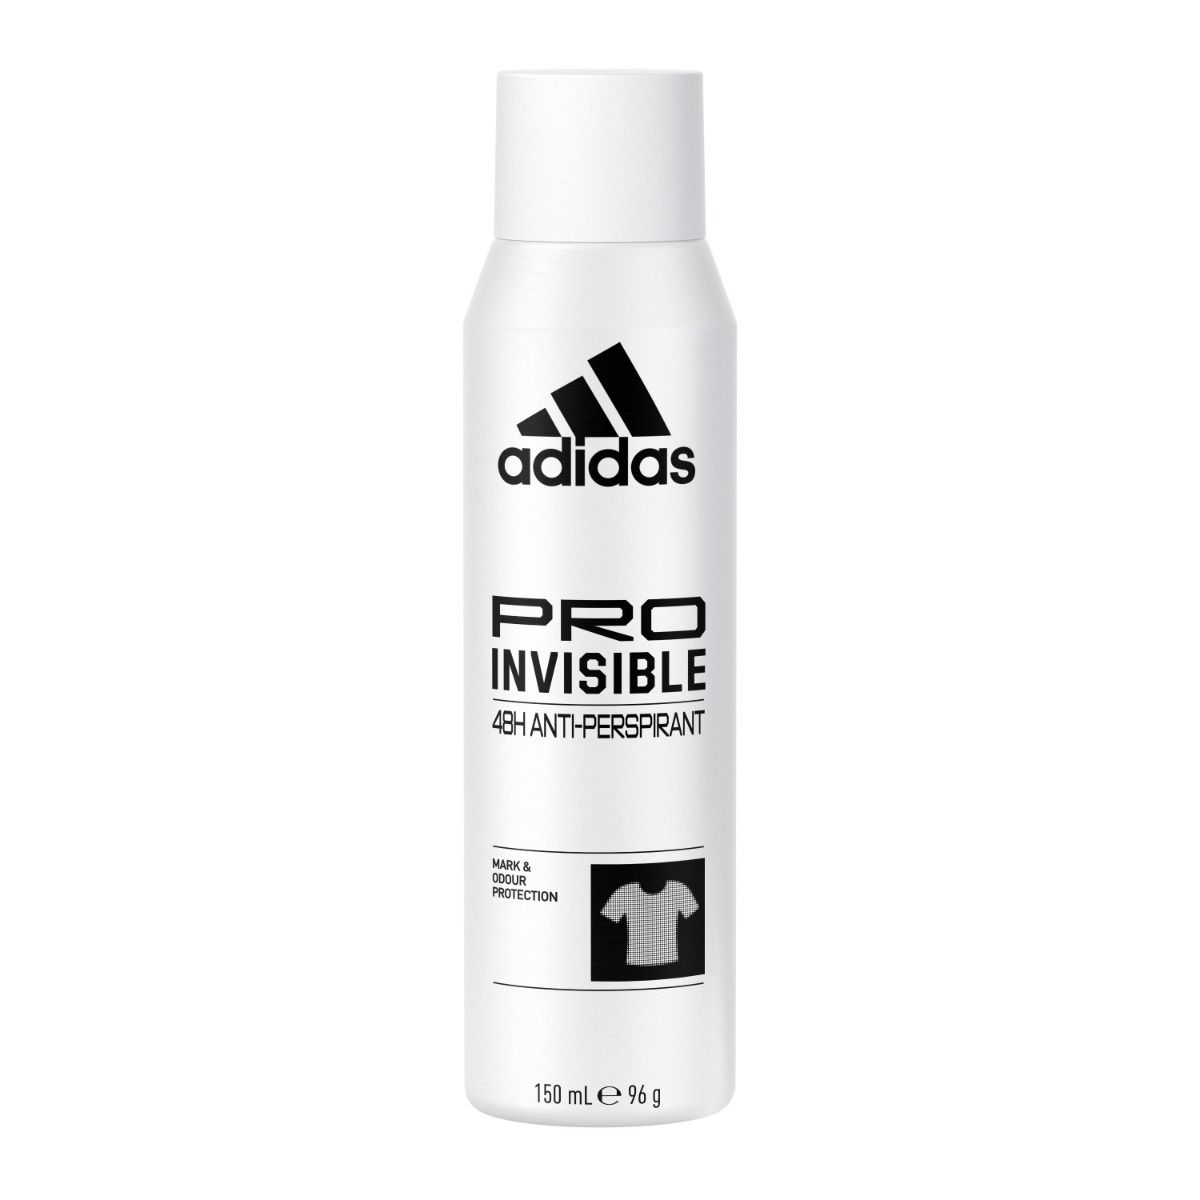 Adidas Pro Invisible антиперспирант для женщин, 150 ml